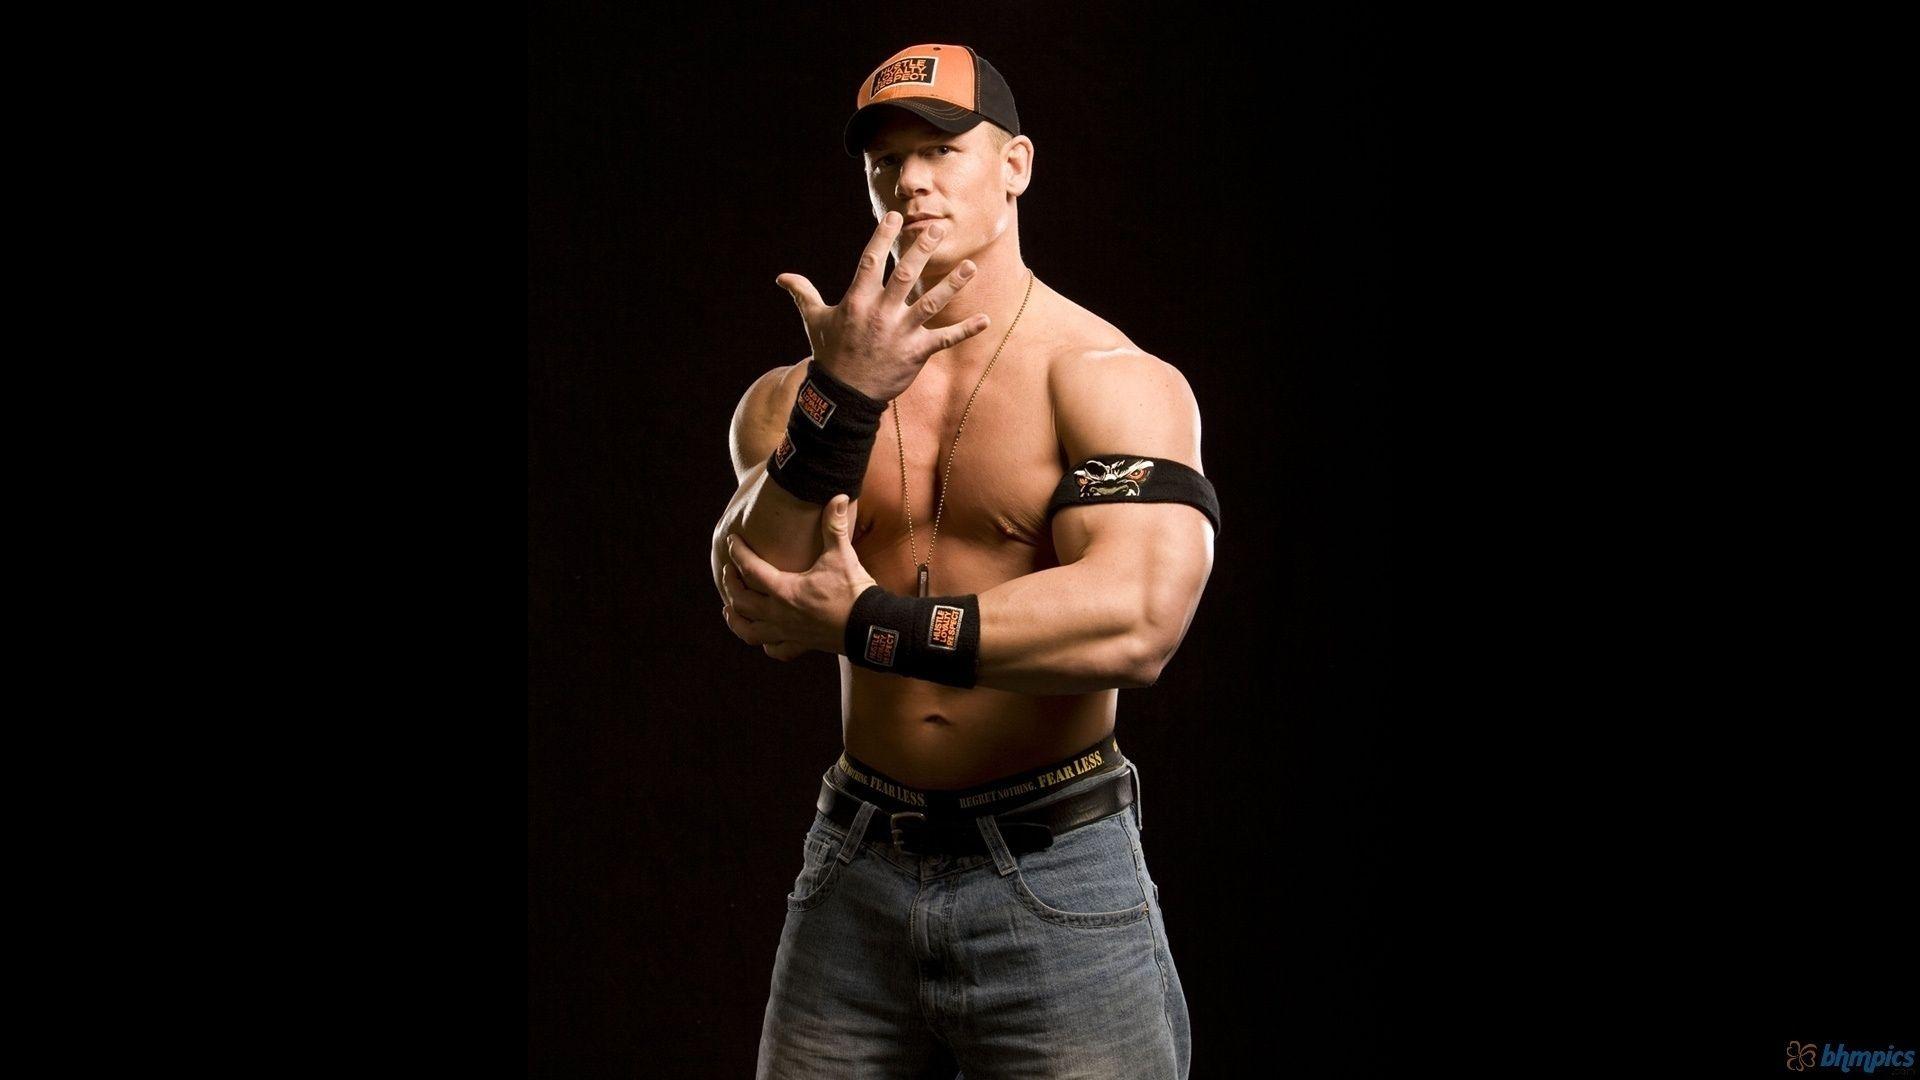 John Cena HD Wallpaper and Background Image